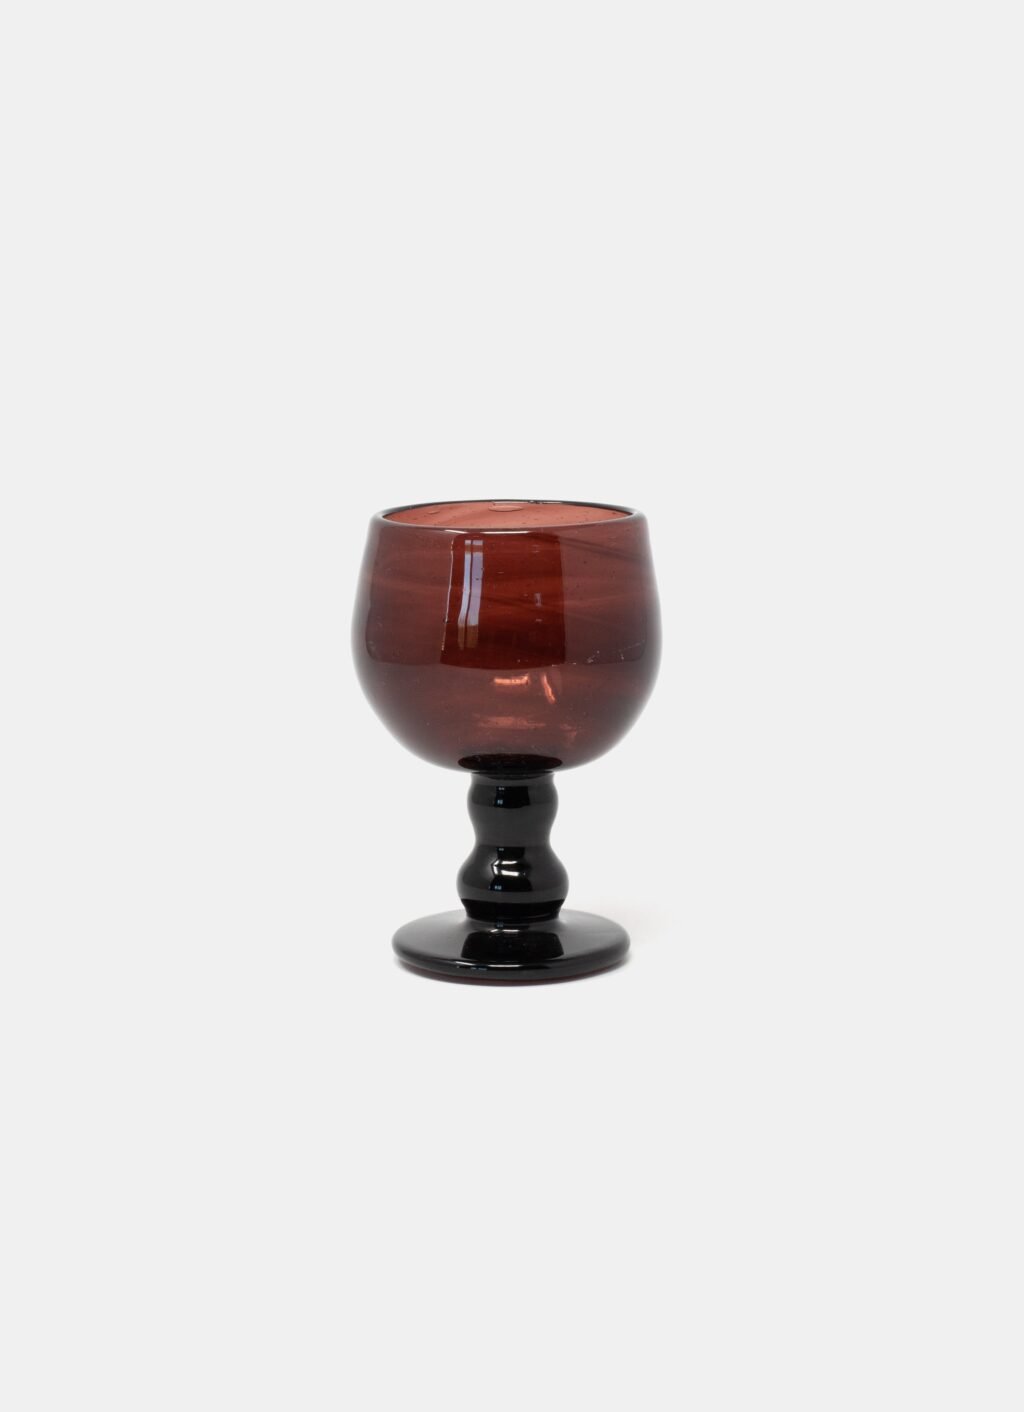 La Soufflerie - Handblown Glass Vase - Framboise - Red Wine Glass